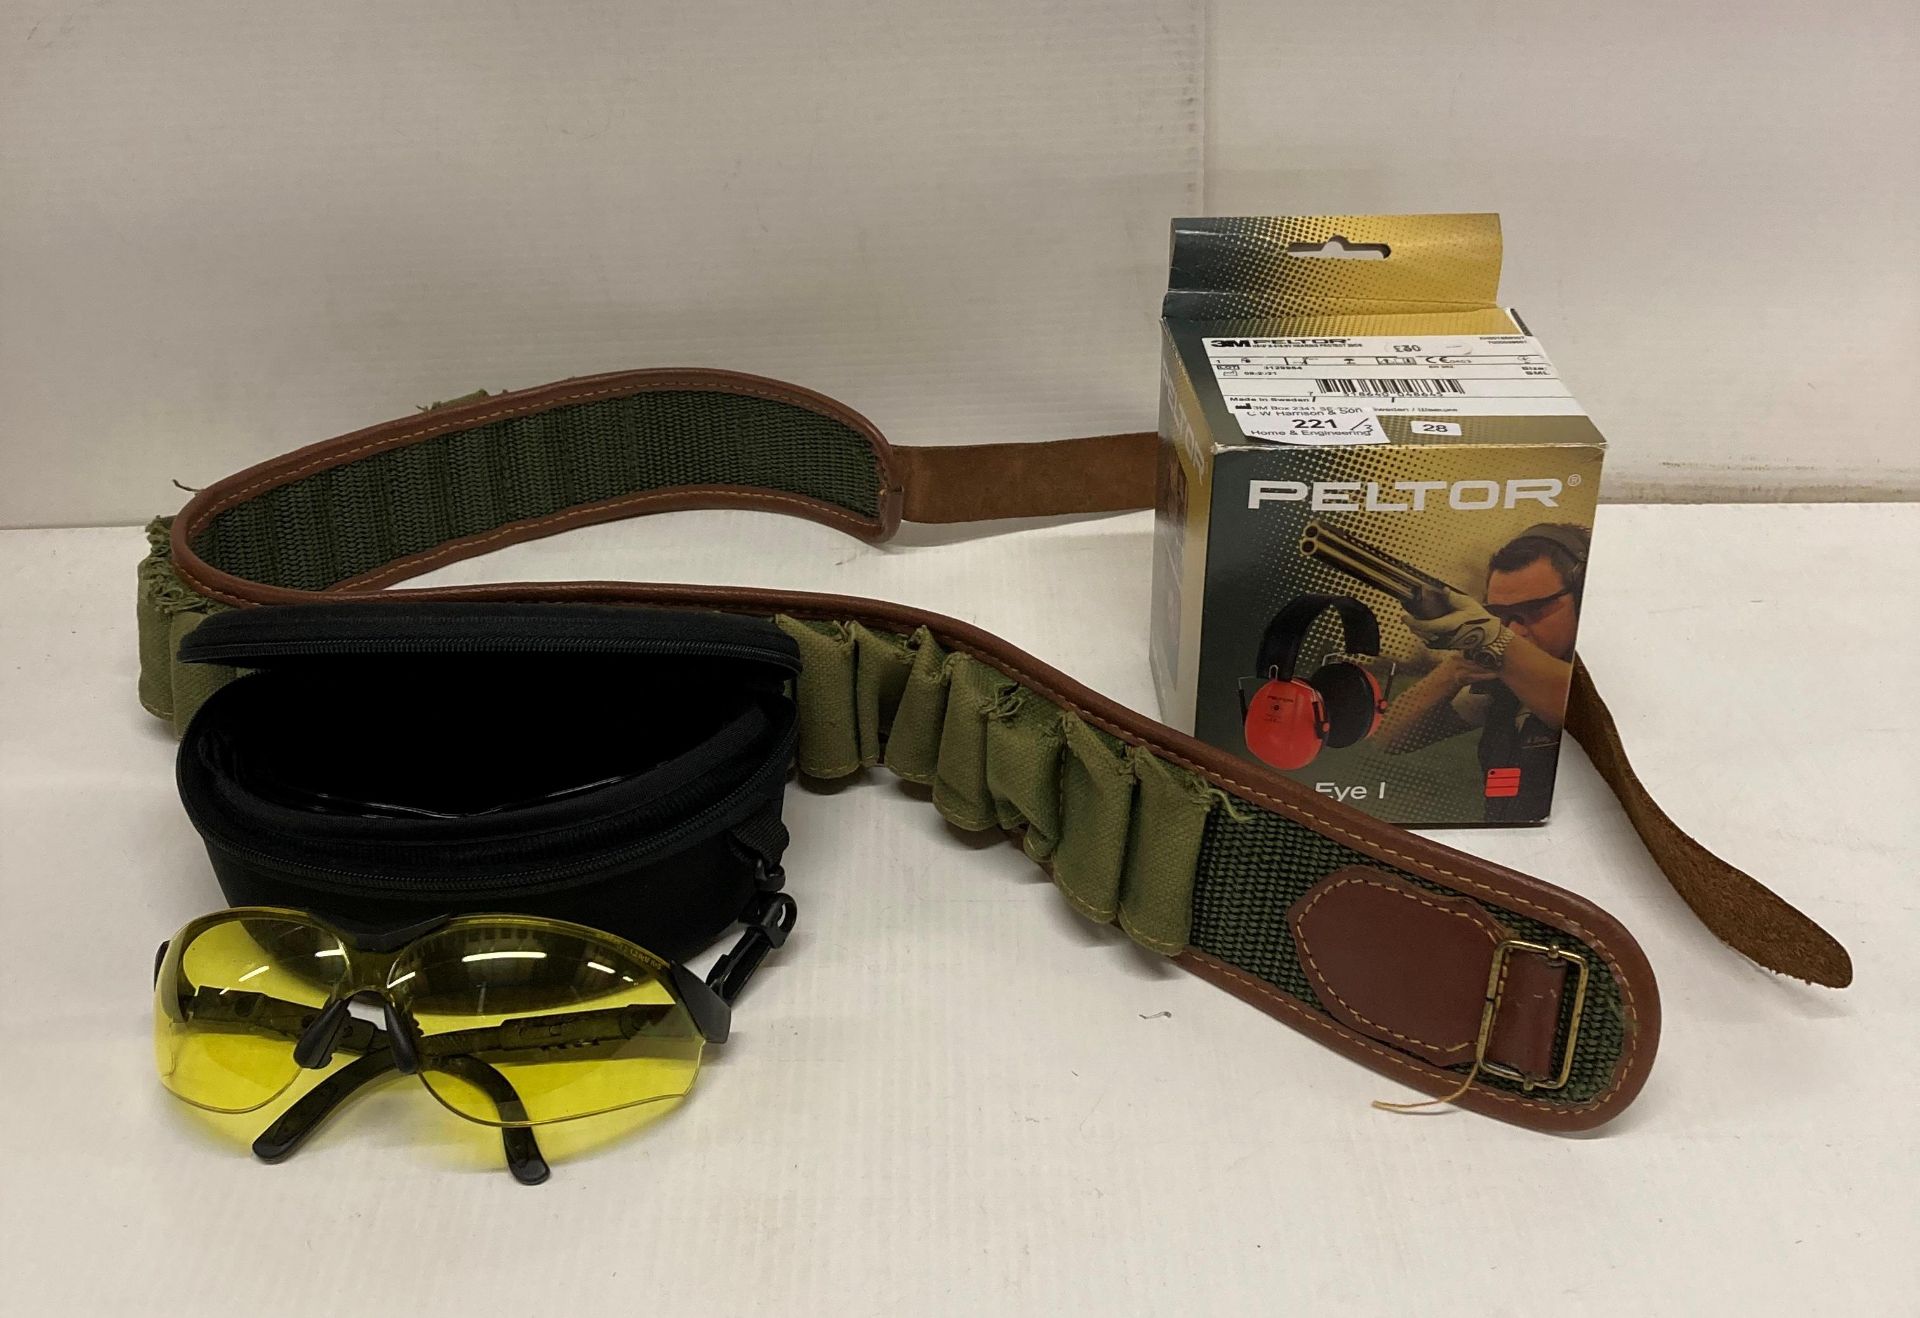 Peltor Bull's Eye 1 ear defenders in box, shotgun cartridge belt (worn),